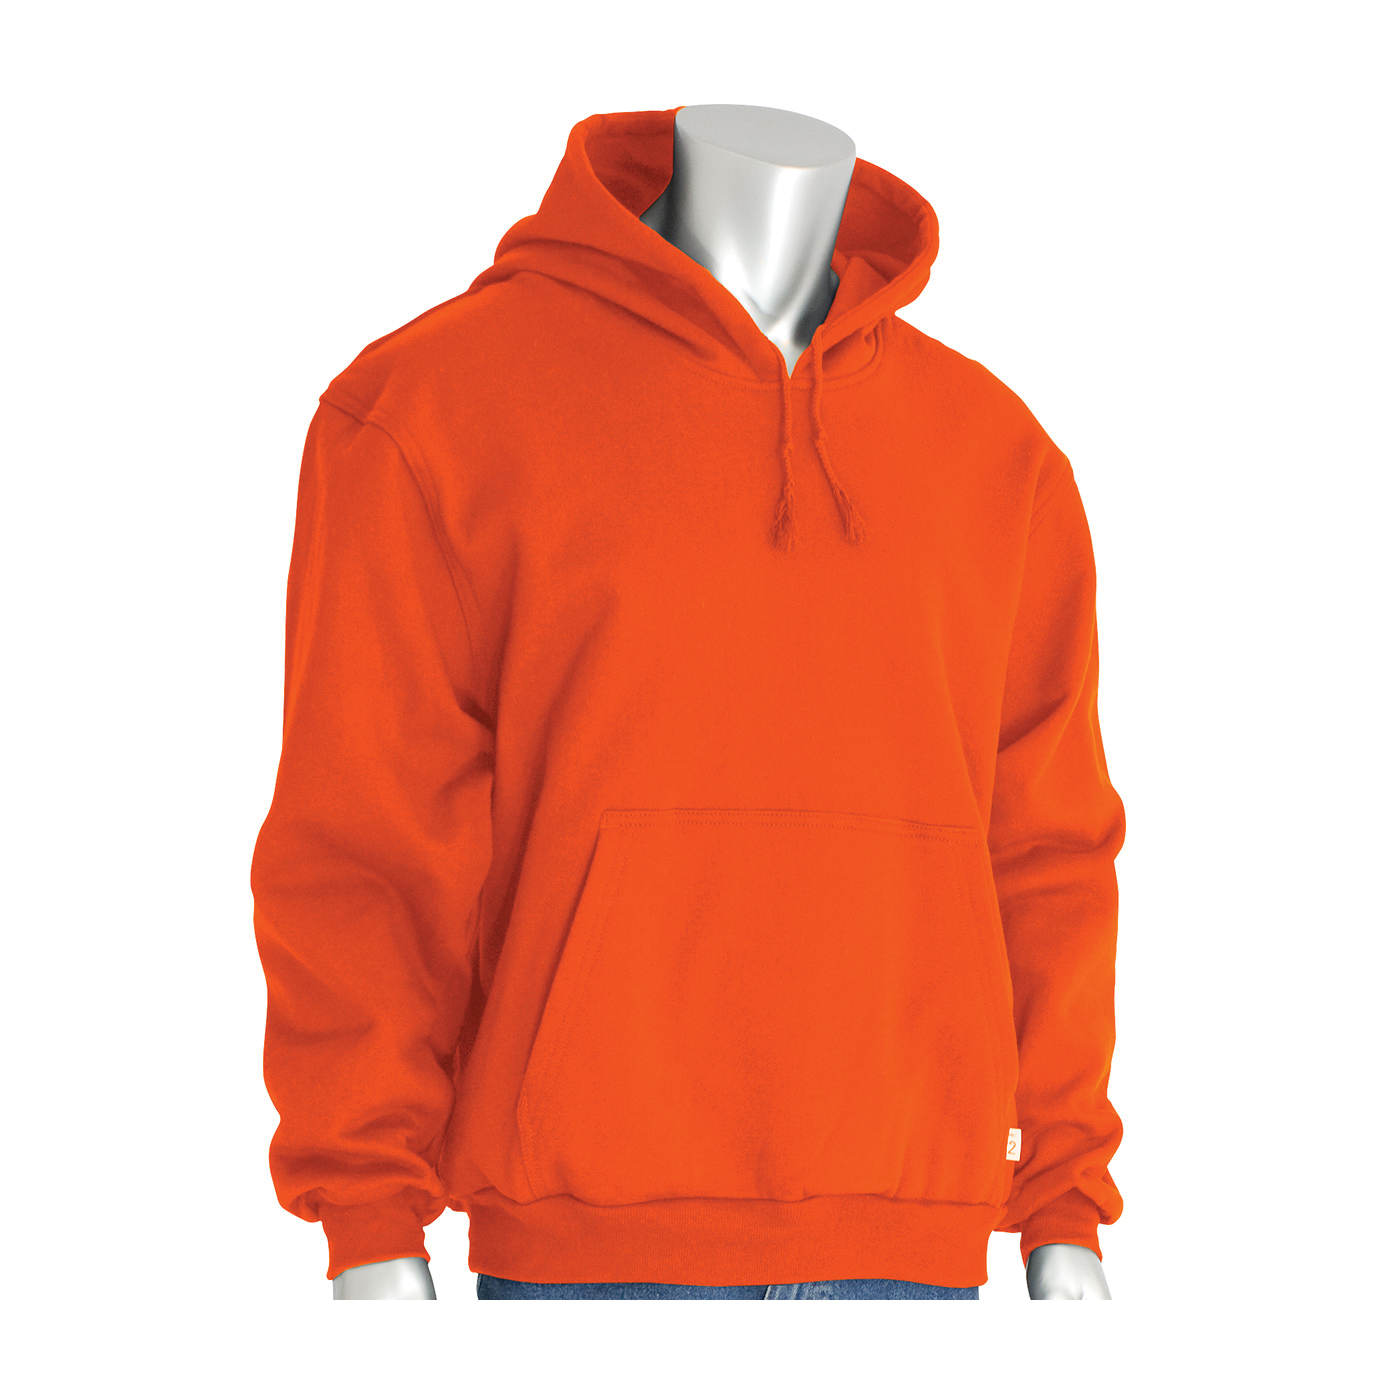 PIP® 385-FRPH-OR/2X Polartec® 385-FRPH Arc and Flame Resistant Sweatshirt, 2XL, Orange, FR Fleece Knit/100% Cotton, 33 in Regular, 34 in Tall L